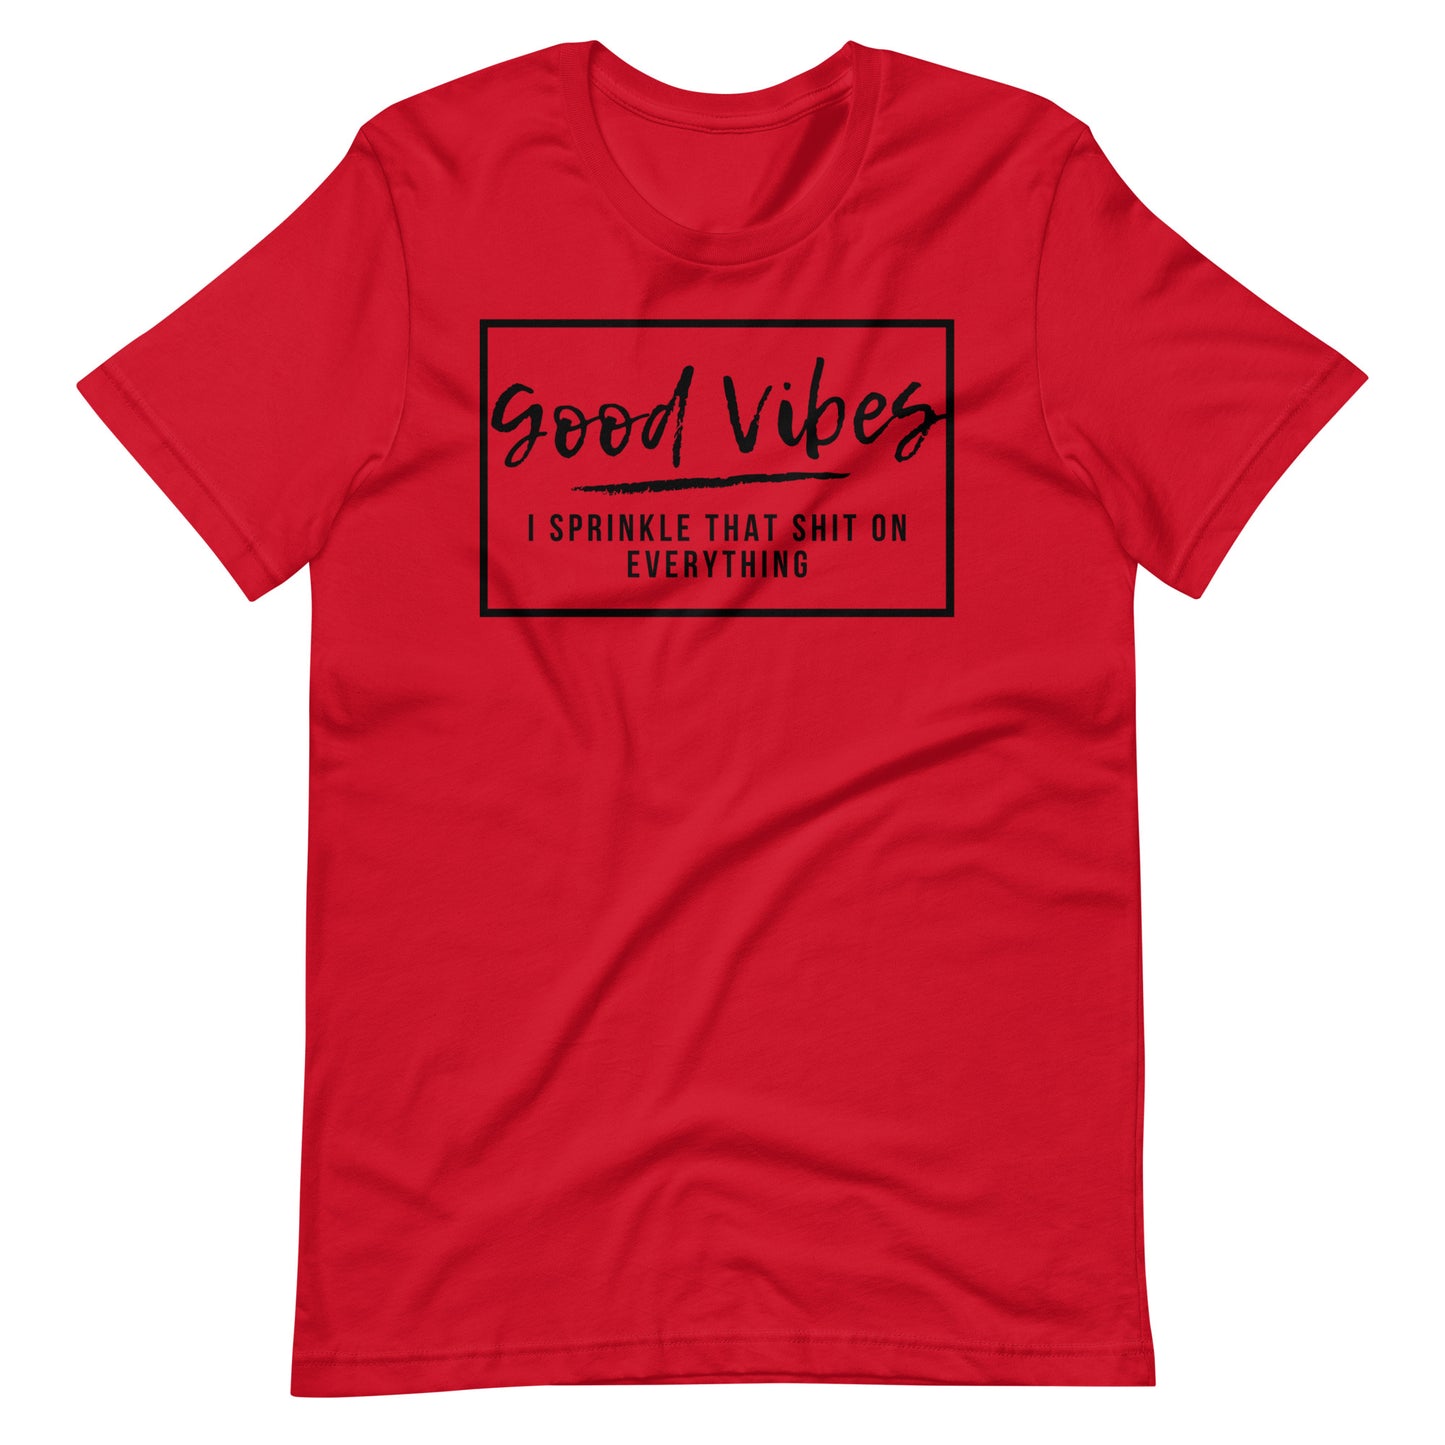 Sprinkle Good Vibes T-Shirt